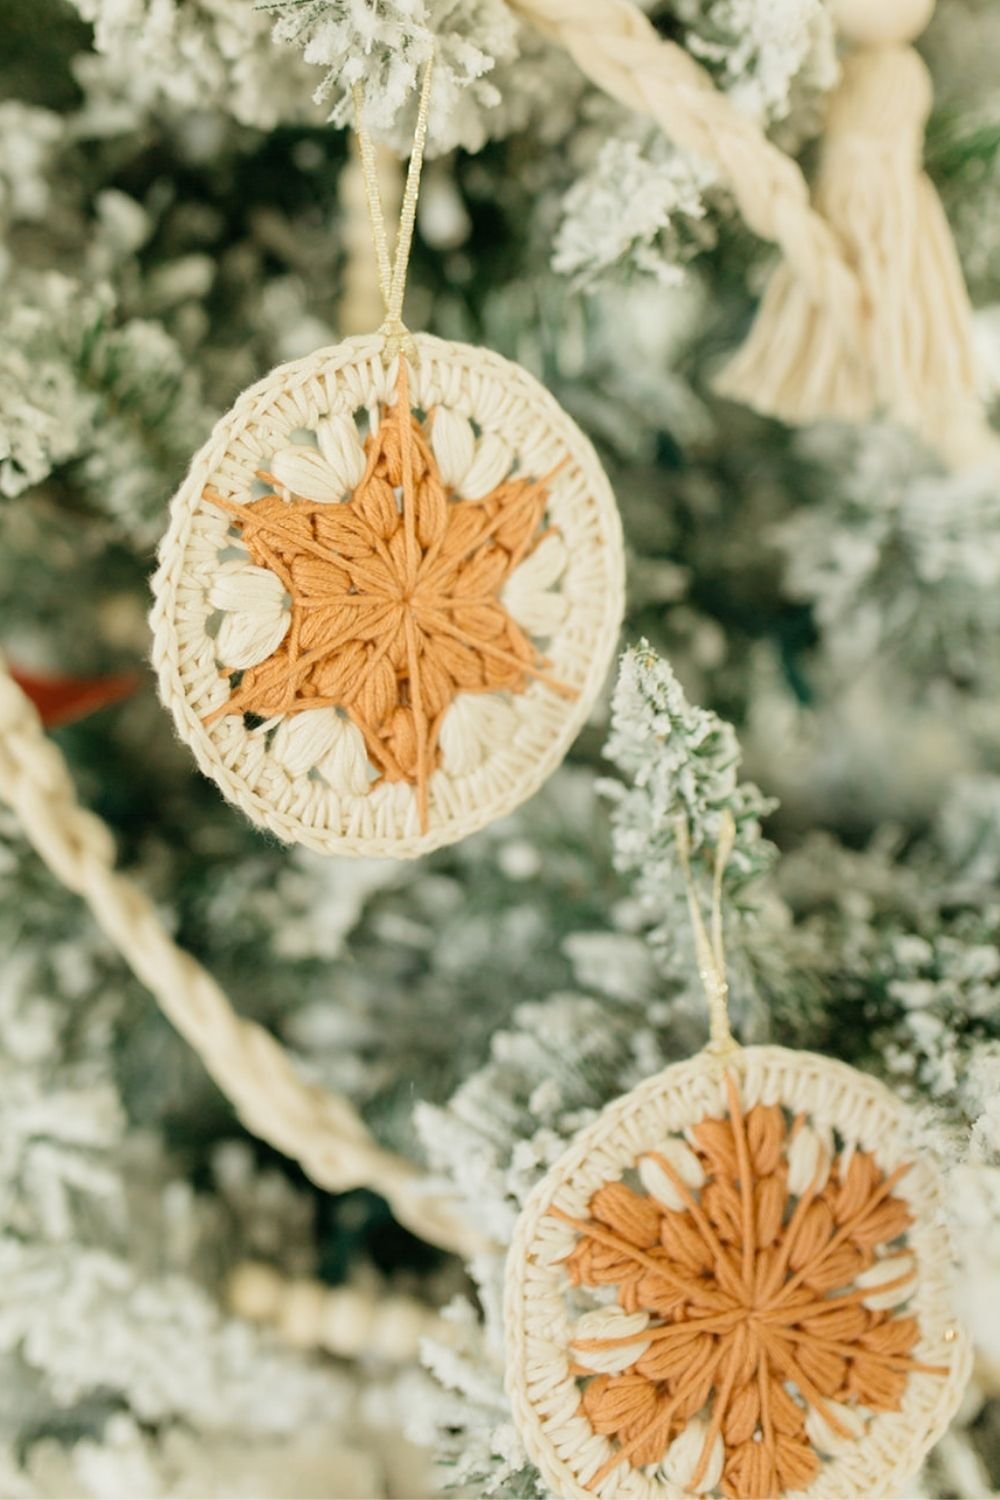 Studio Shot Of Christmas Ornaments #1 by Daniel Grill